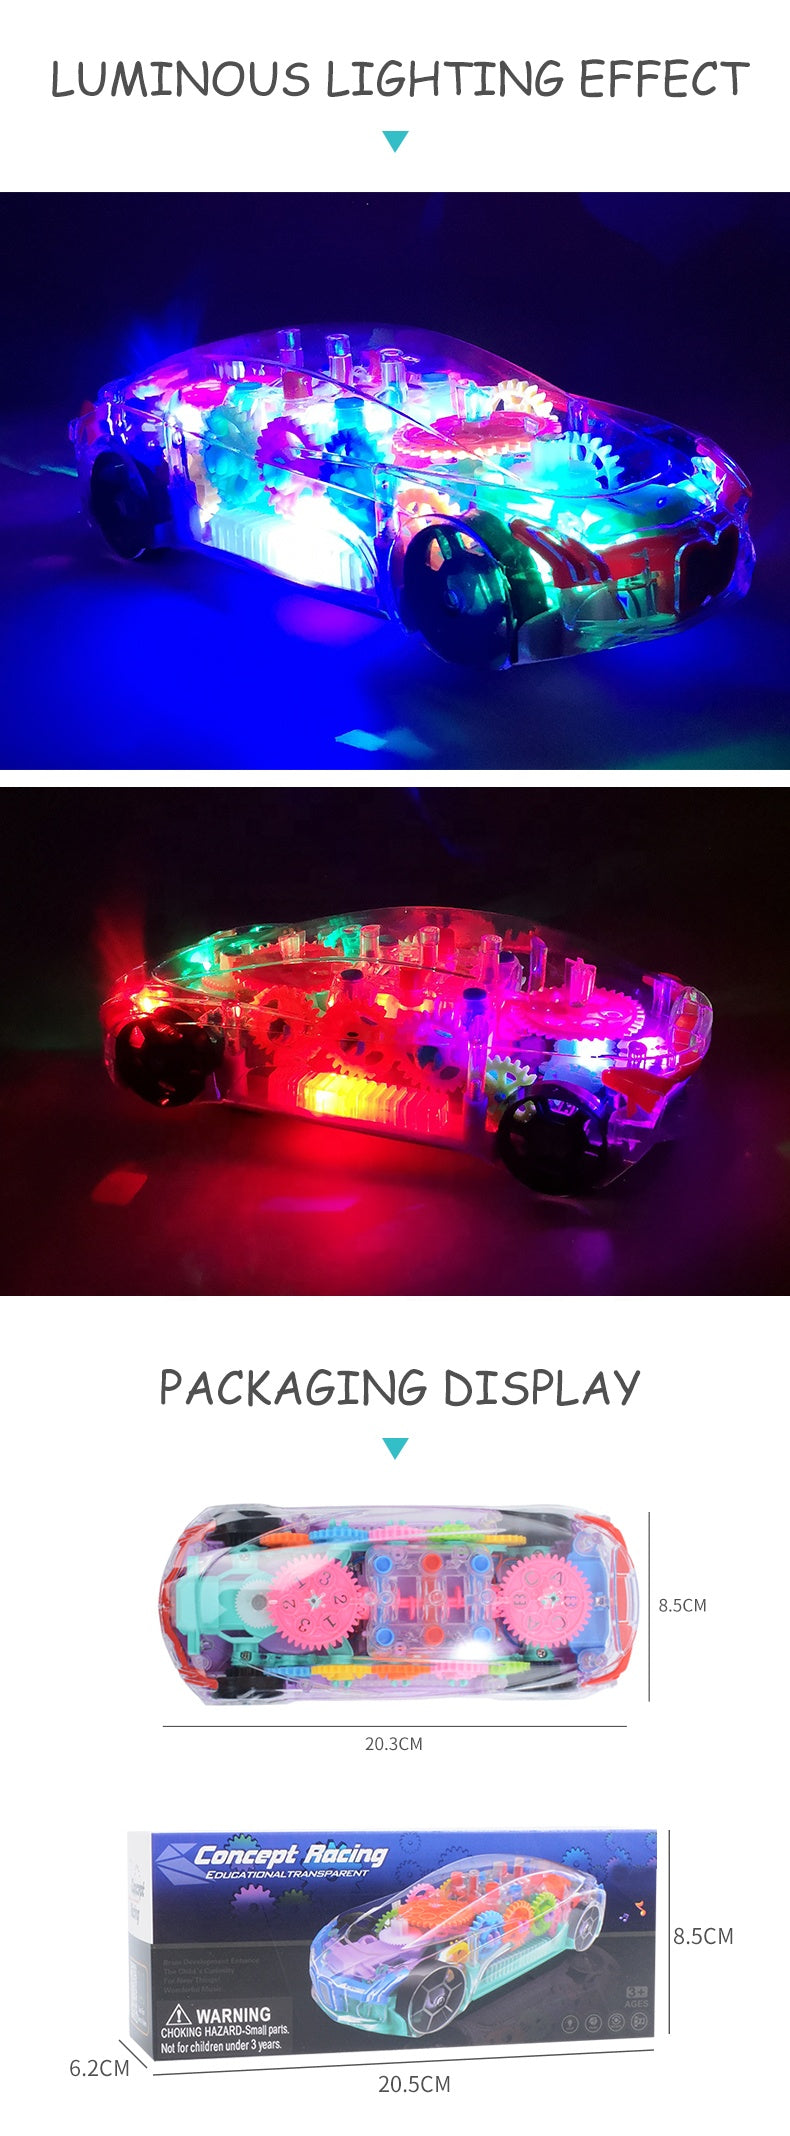 D ETERNAL Mechanical Car Toy for Kids with Gear Technology,3D Light, Musical Sound & 360 Degree Rotation